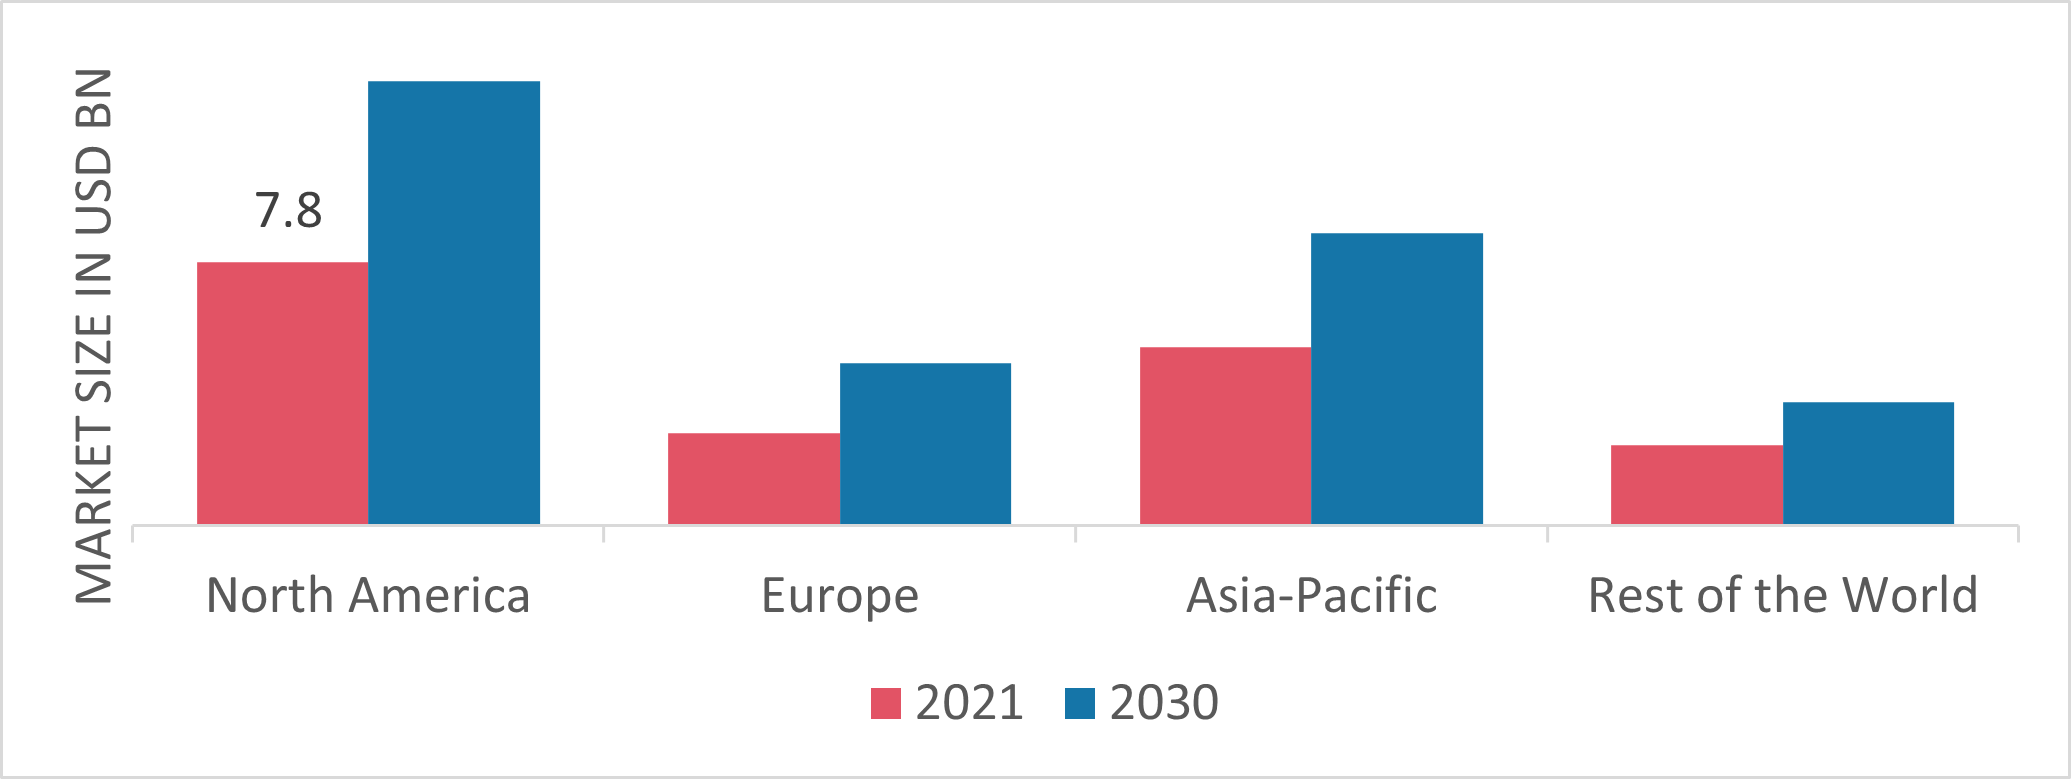 Powersports Market Share By Region 2021 (%)